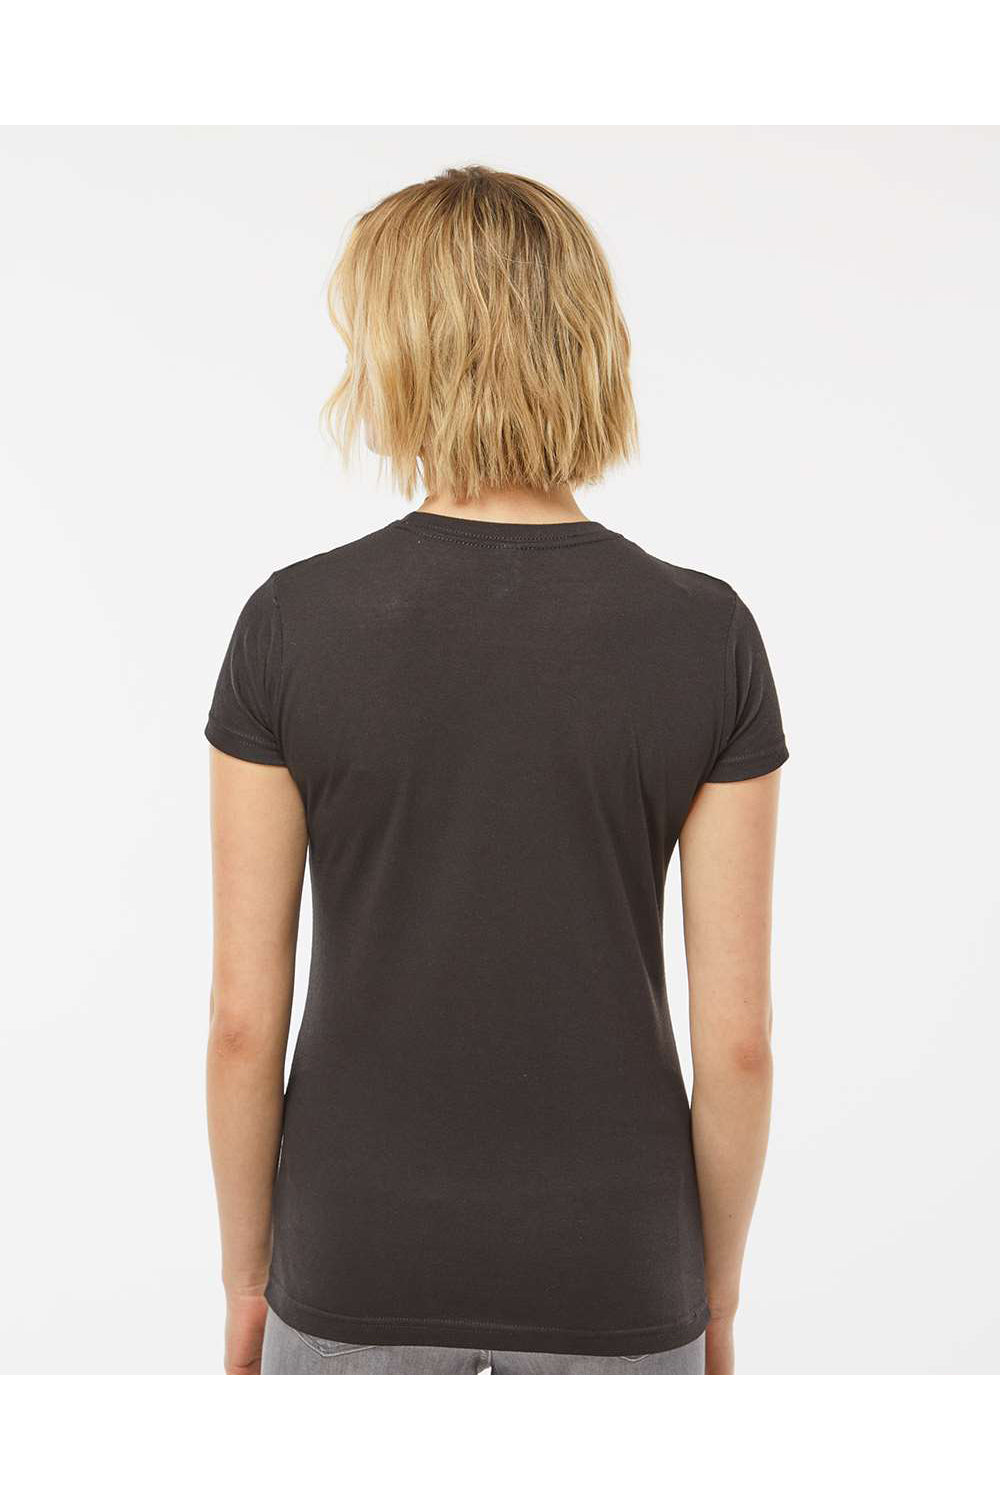 Tultex 240 Womens Poly-Rich Short Sleeve Crewneck T-Shirt Black Model Back